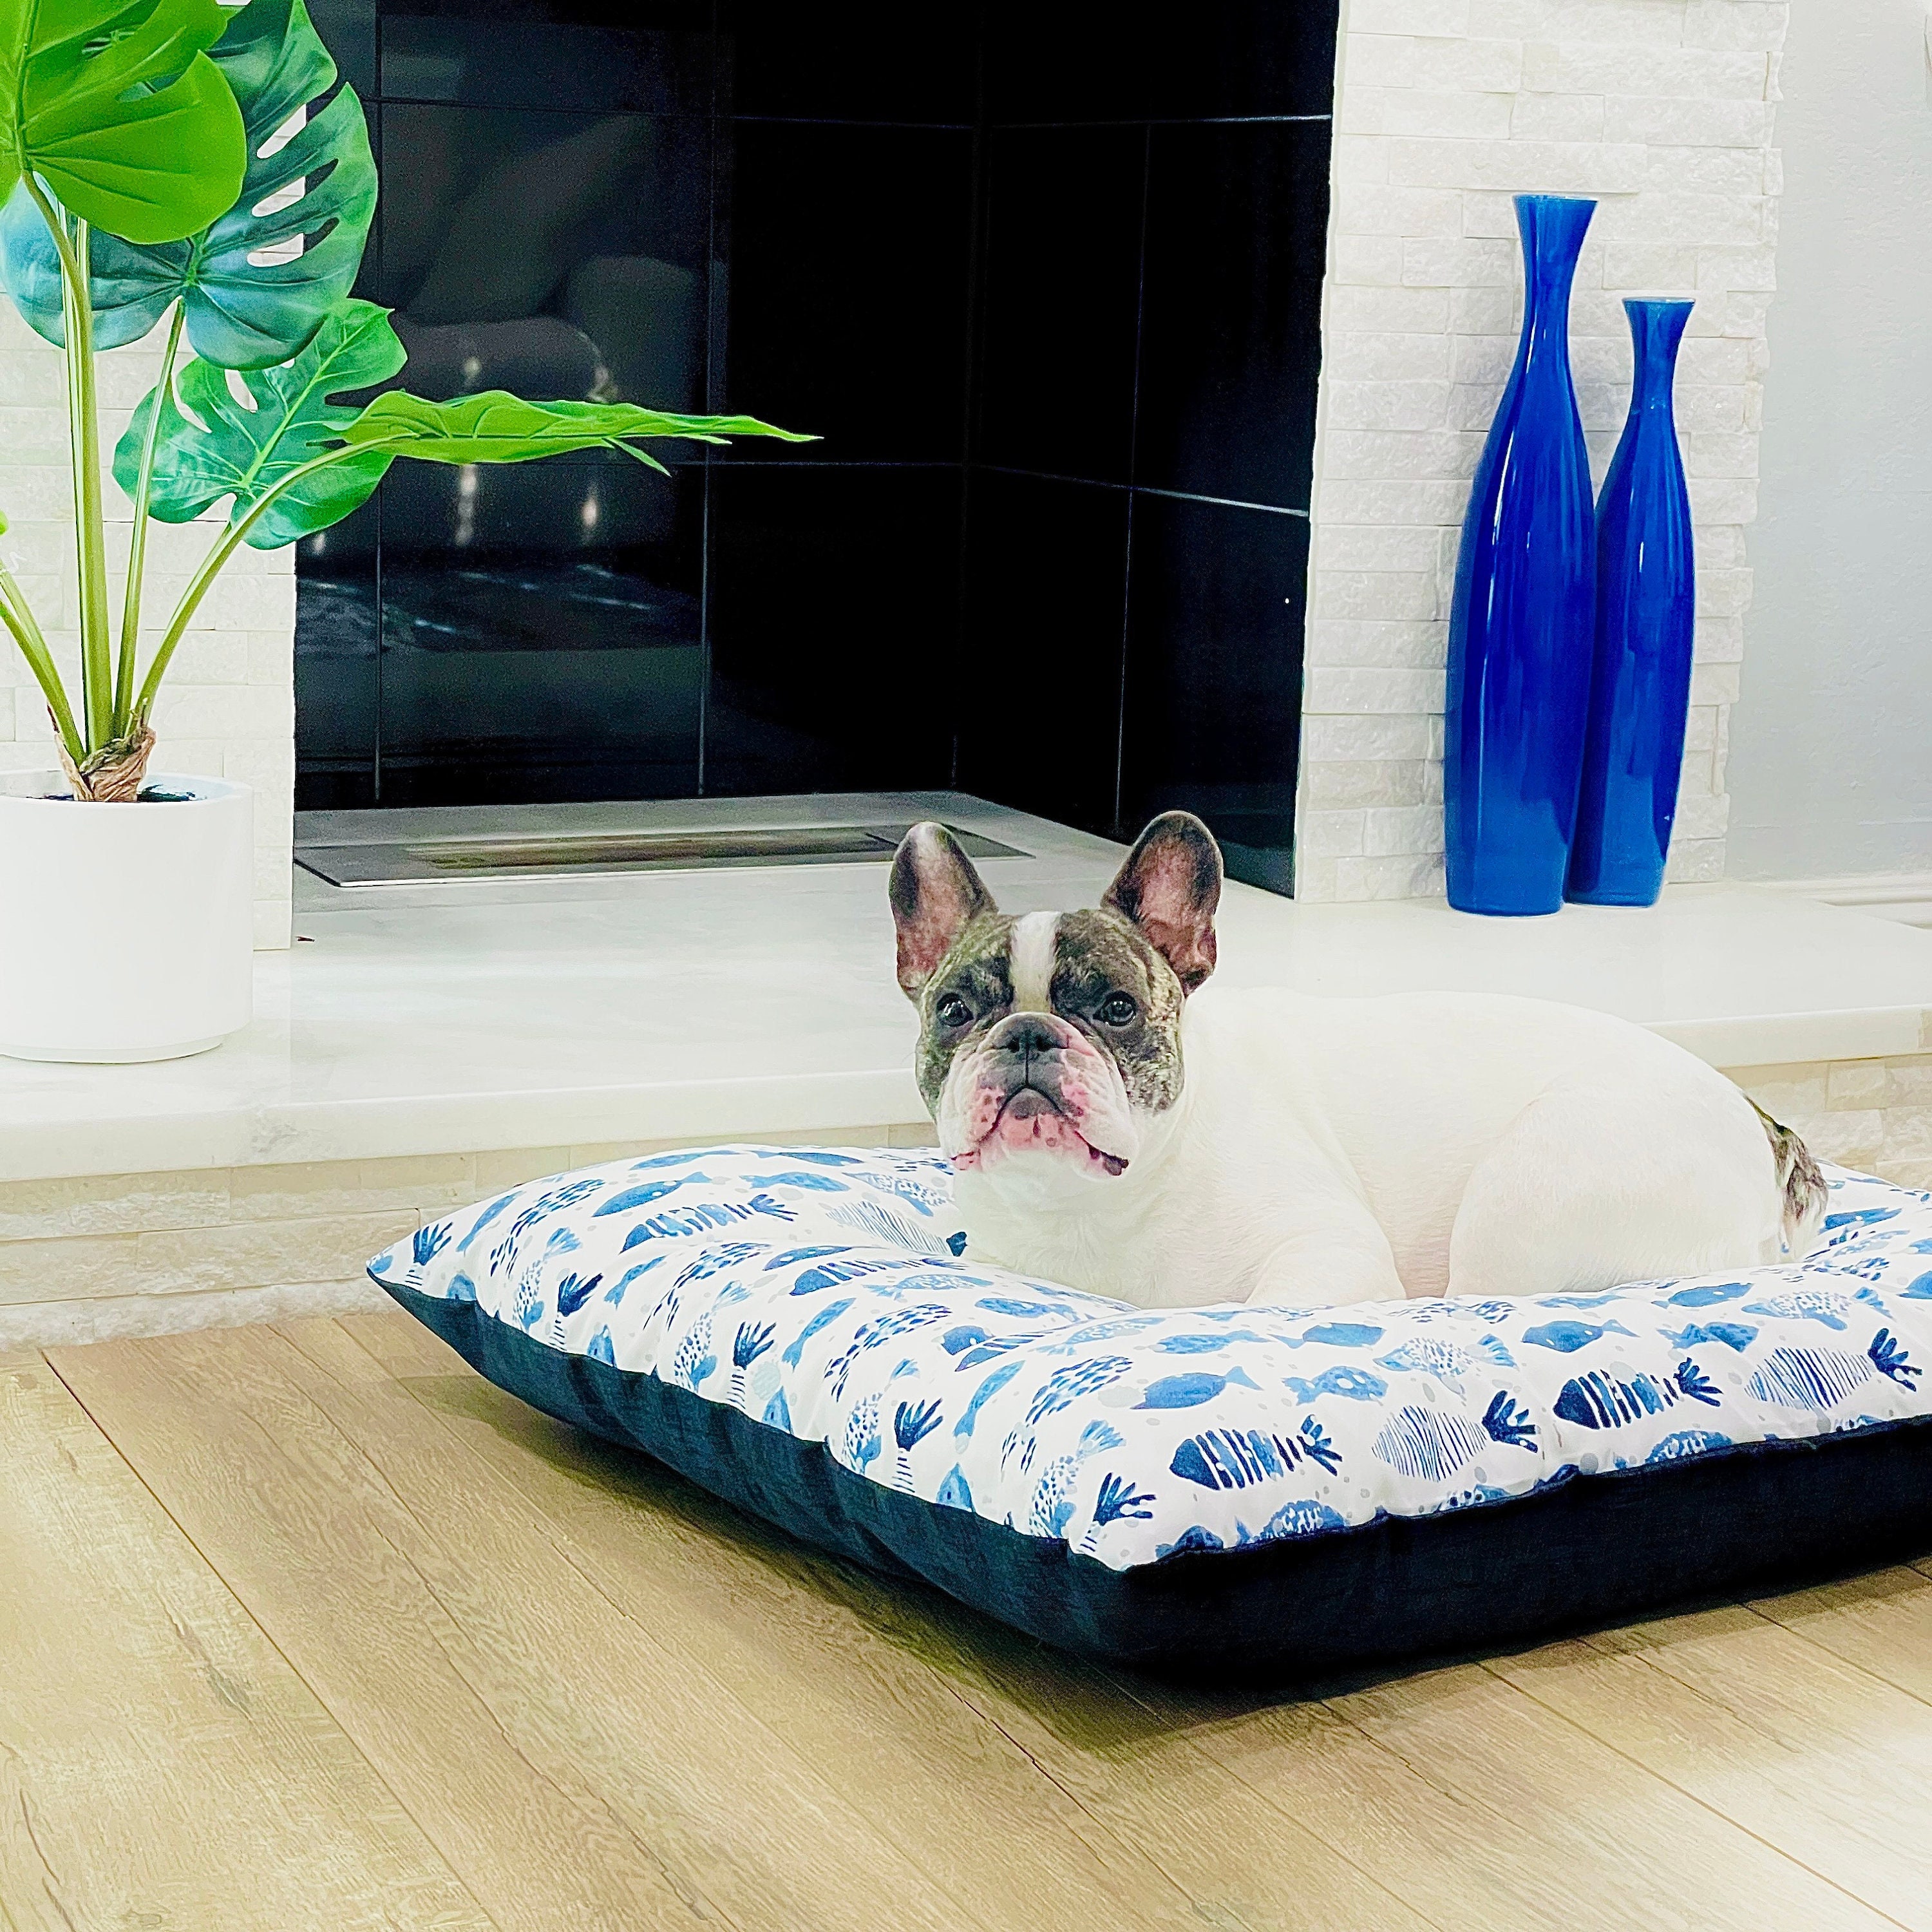 Custom Made Designer Dog Beds & Clothes for Sale